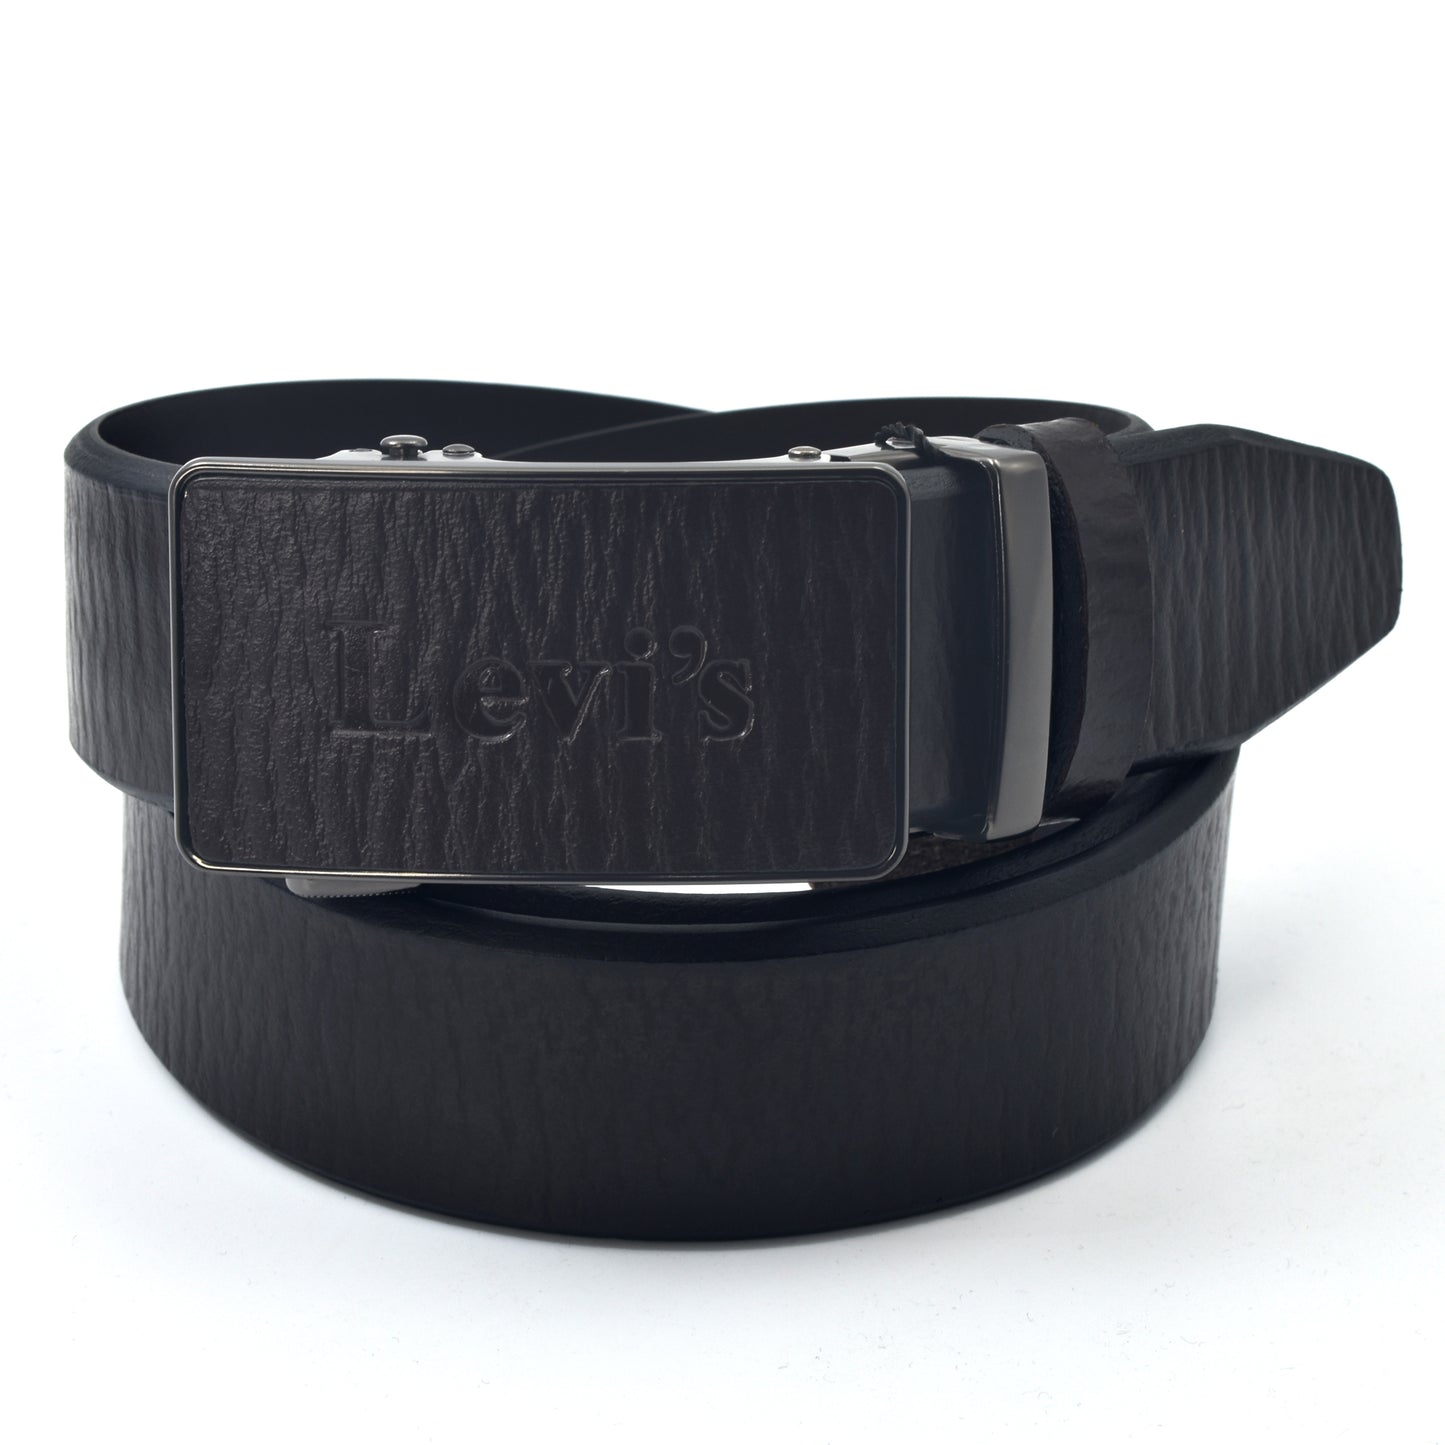 Gear Buckles Belt | Original Leather | ORGN Belt 72